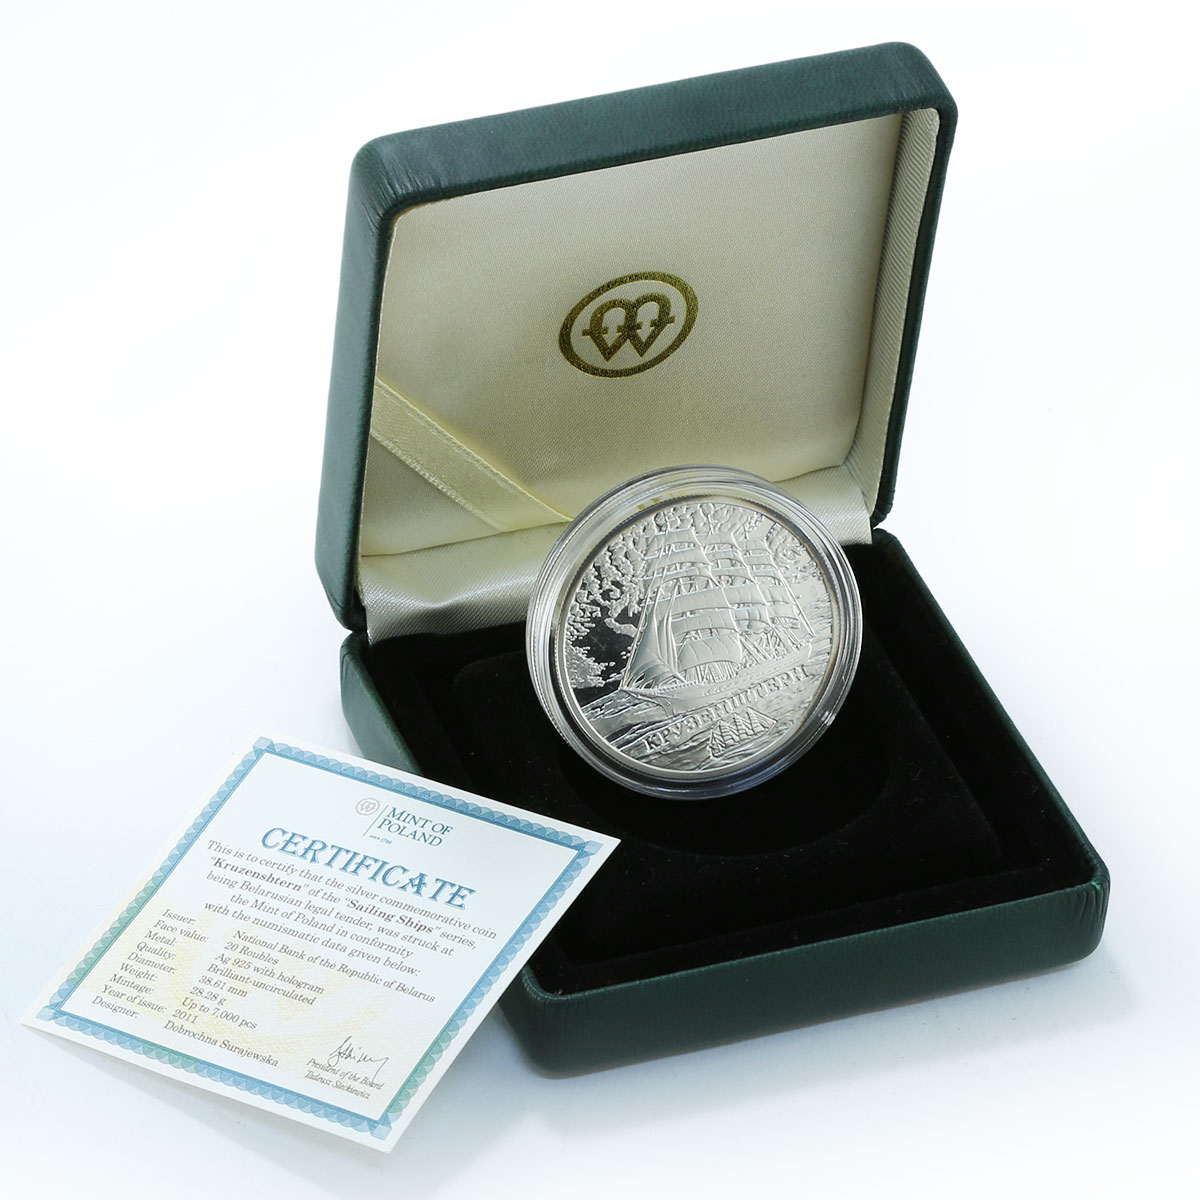 Belarus 20 roubles Kruzenstern Sailing Ships hologram silver coin 2011